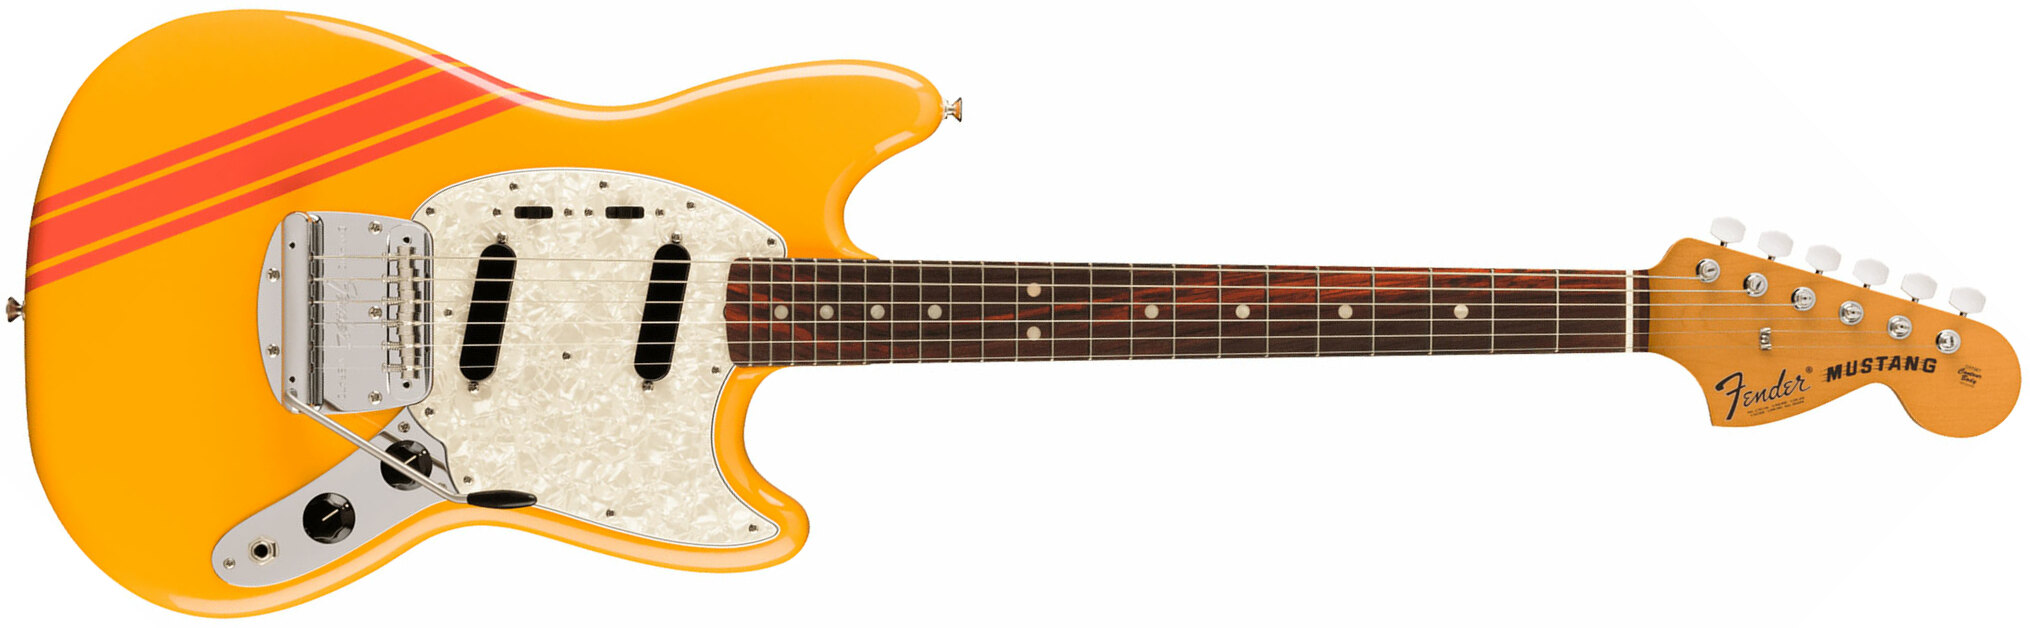 Fender Mustang 70s Competition Vintera 2 Mex 2s Trem Rw - Competition Orange - Retro rock electric guitar - Main picture